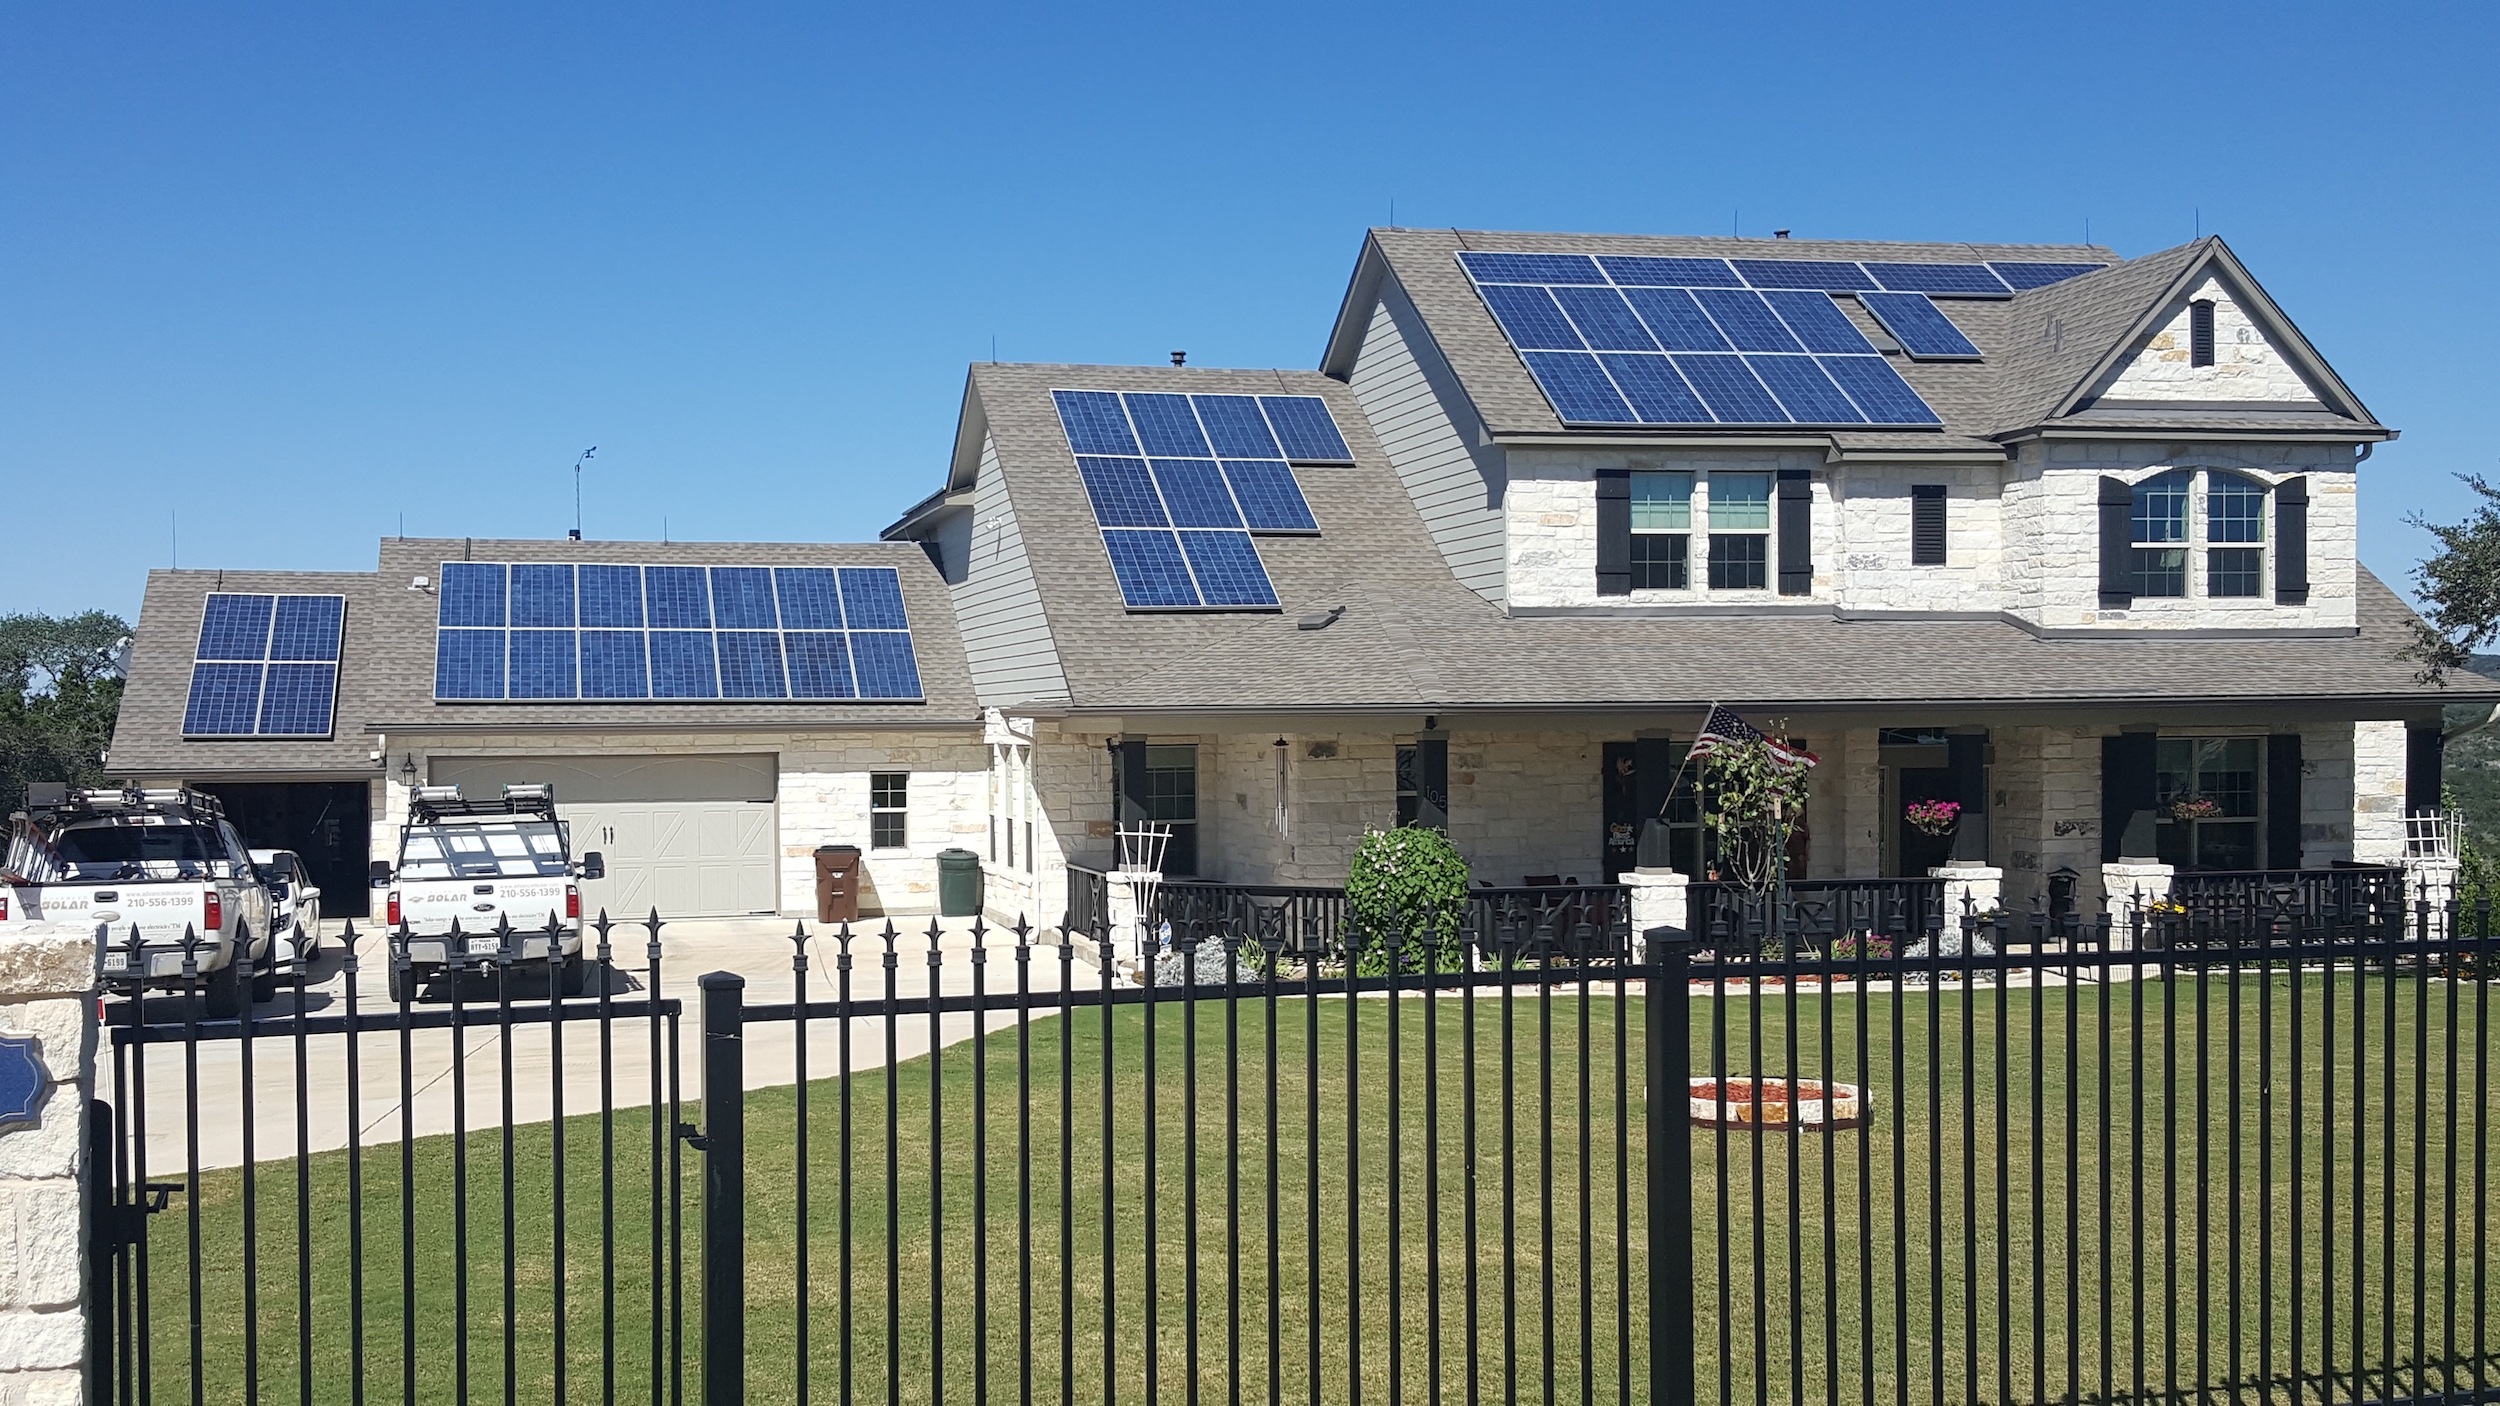 Advance Solar & Electric Residential Solar Oesterle Residance Texas Usa 18.19kw